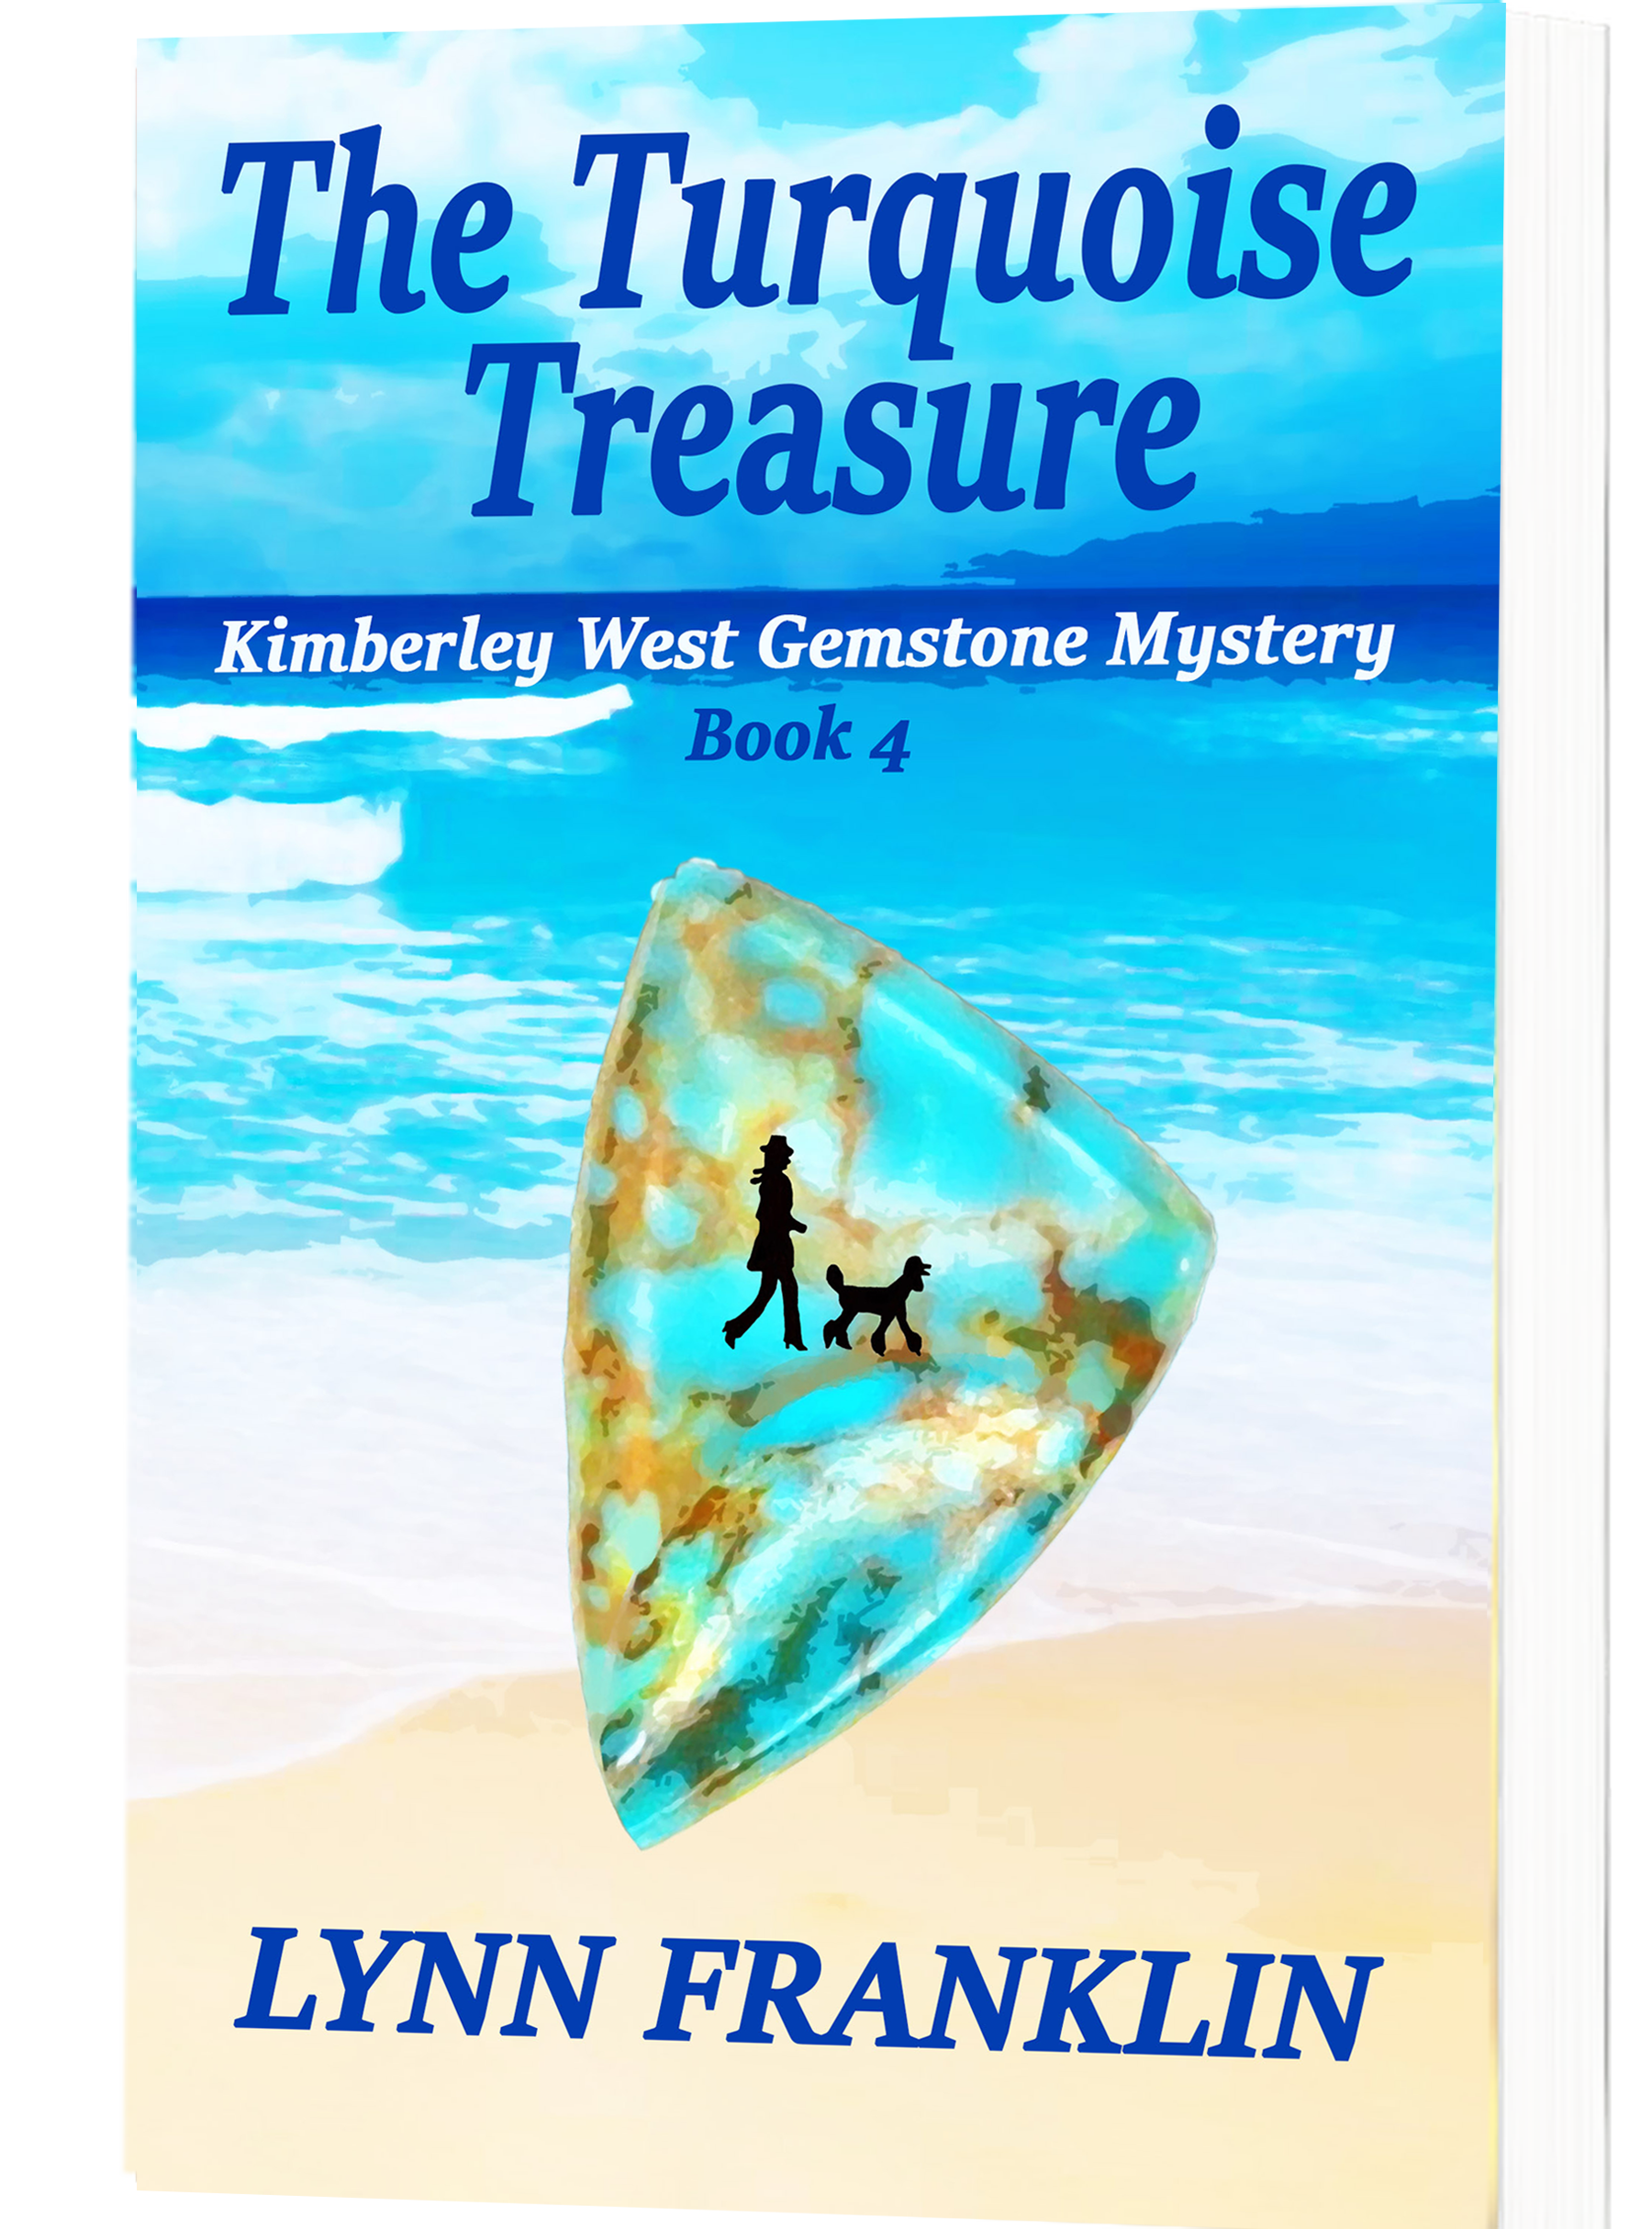 The Turquoise Treasure: Kimberley West Gemstone Mystery Book 4